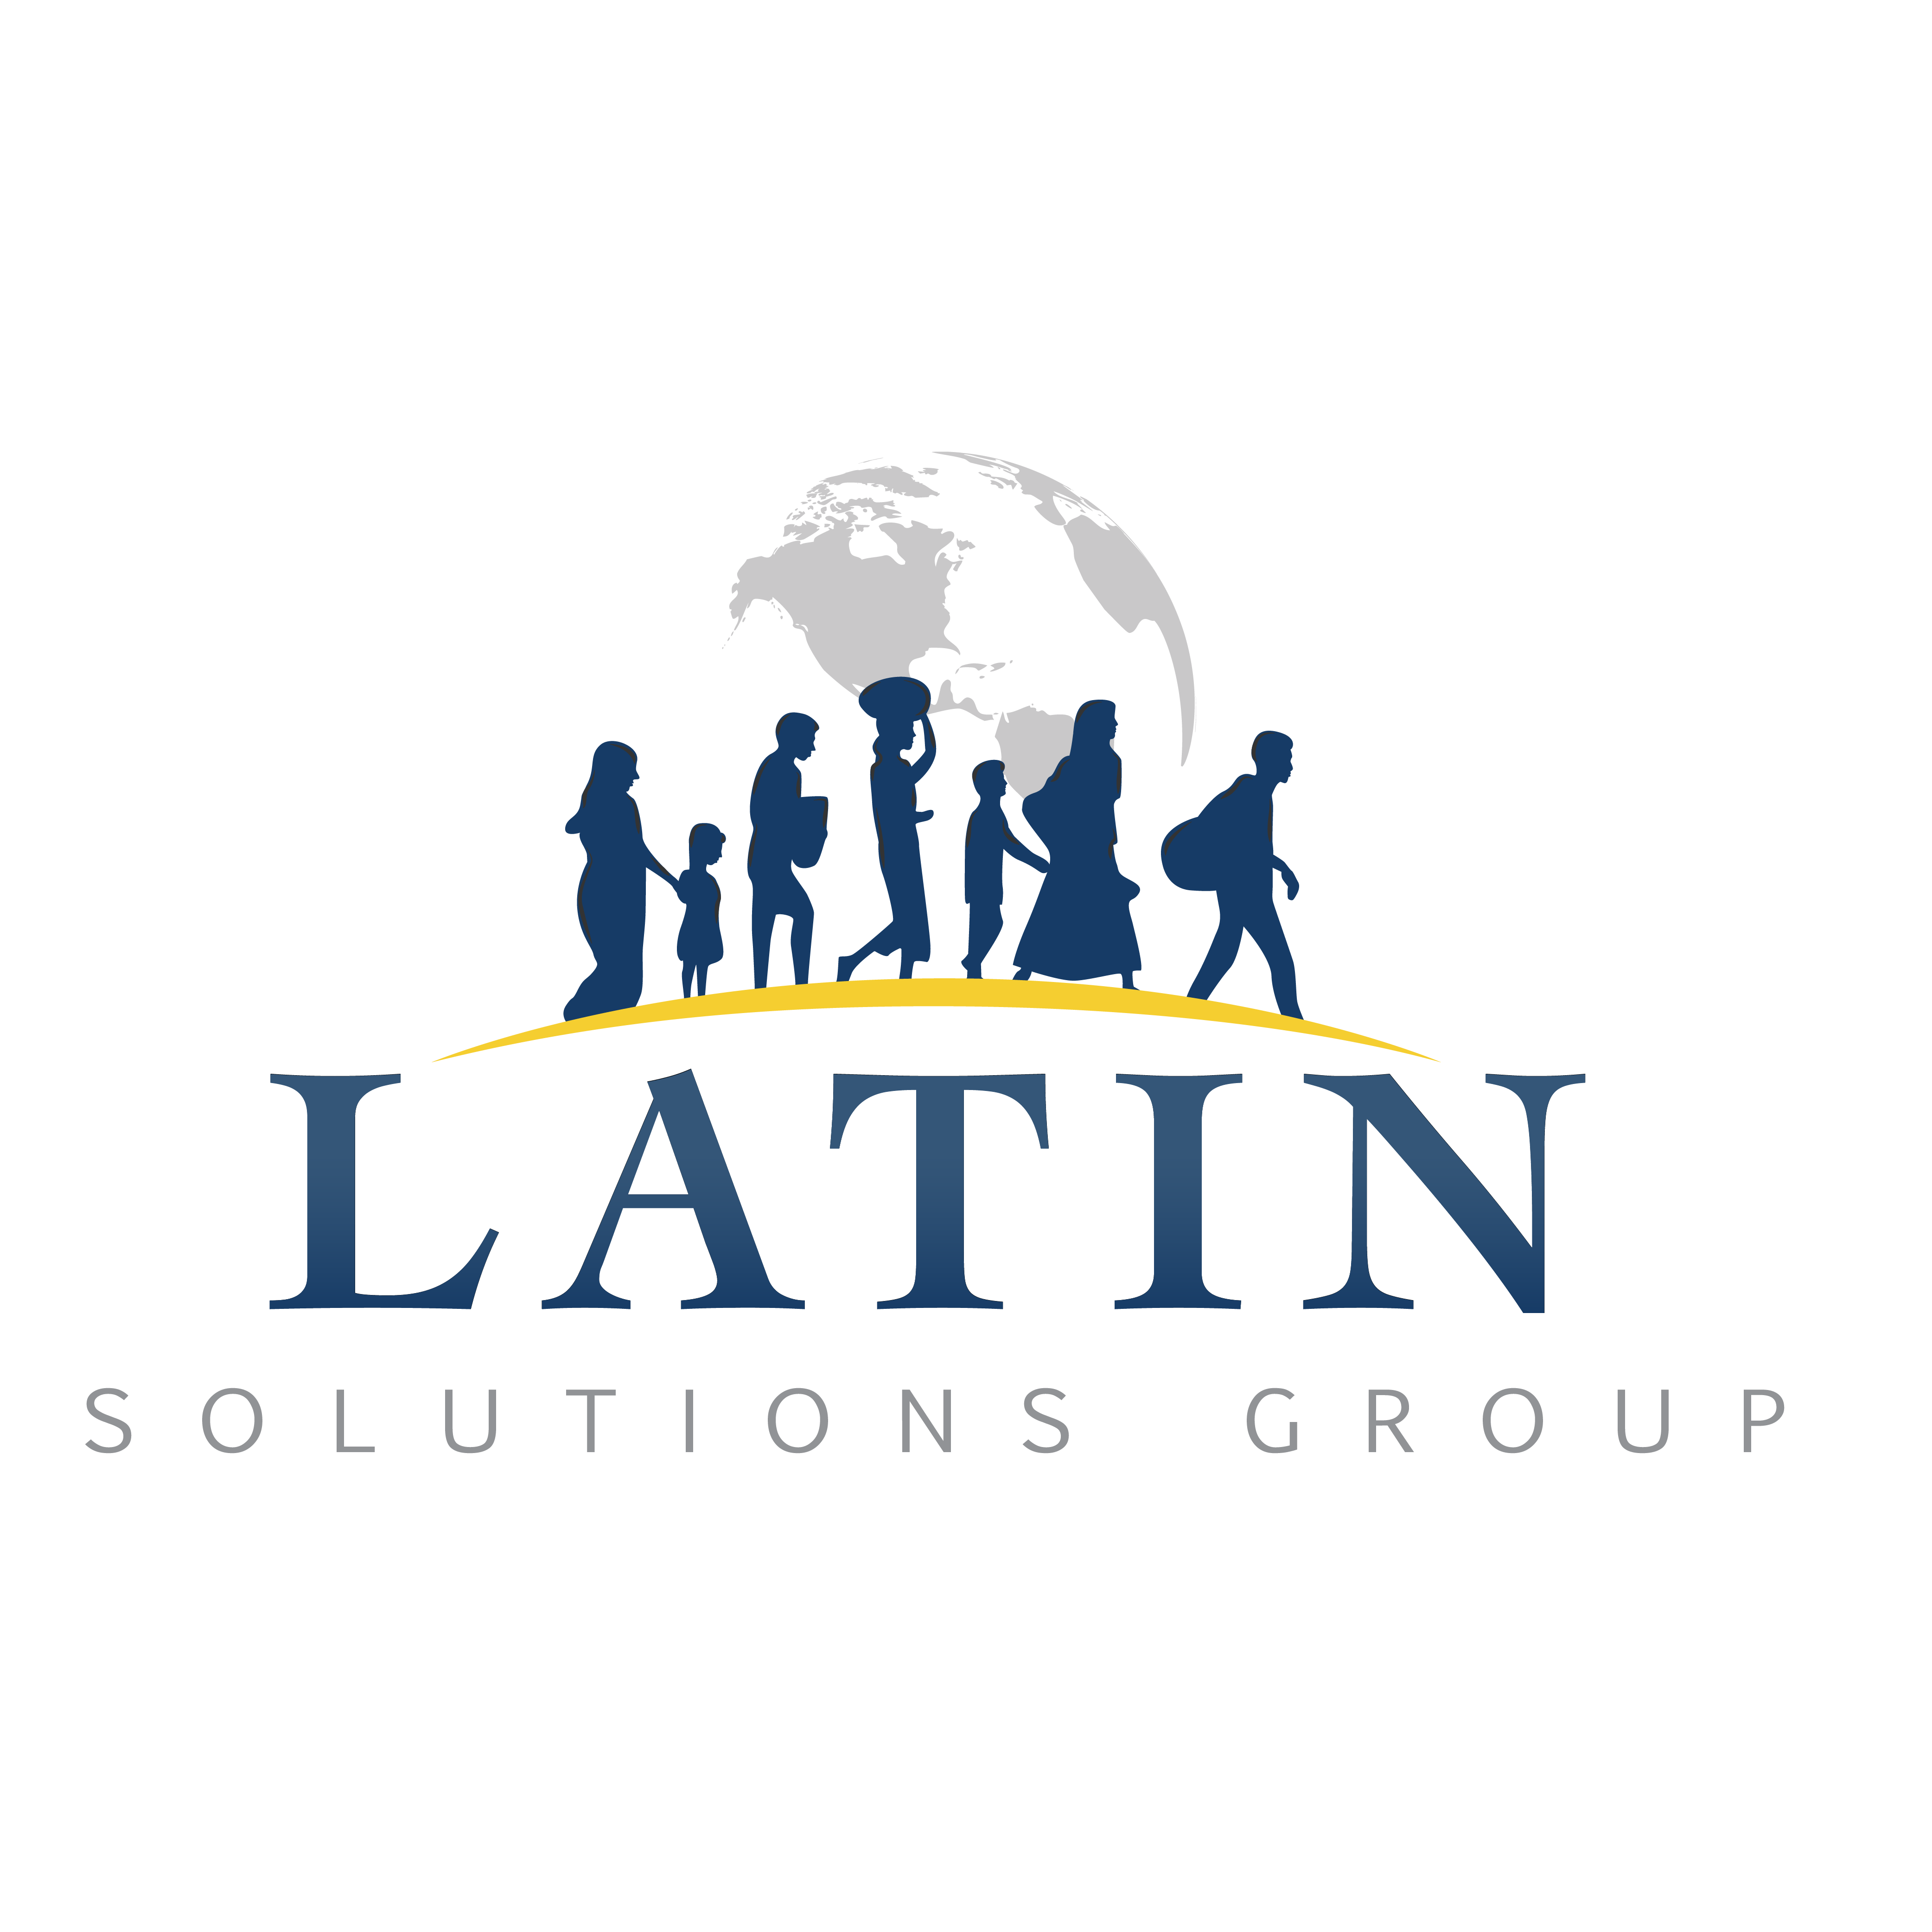 Enlaces valiosos - Hispanic Solutions Group